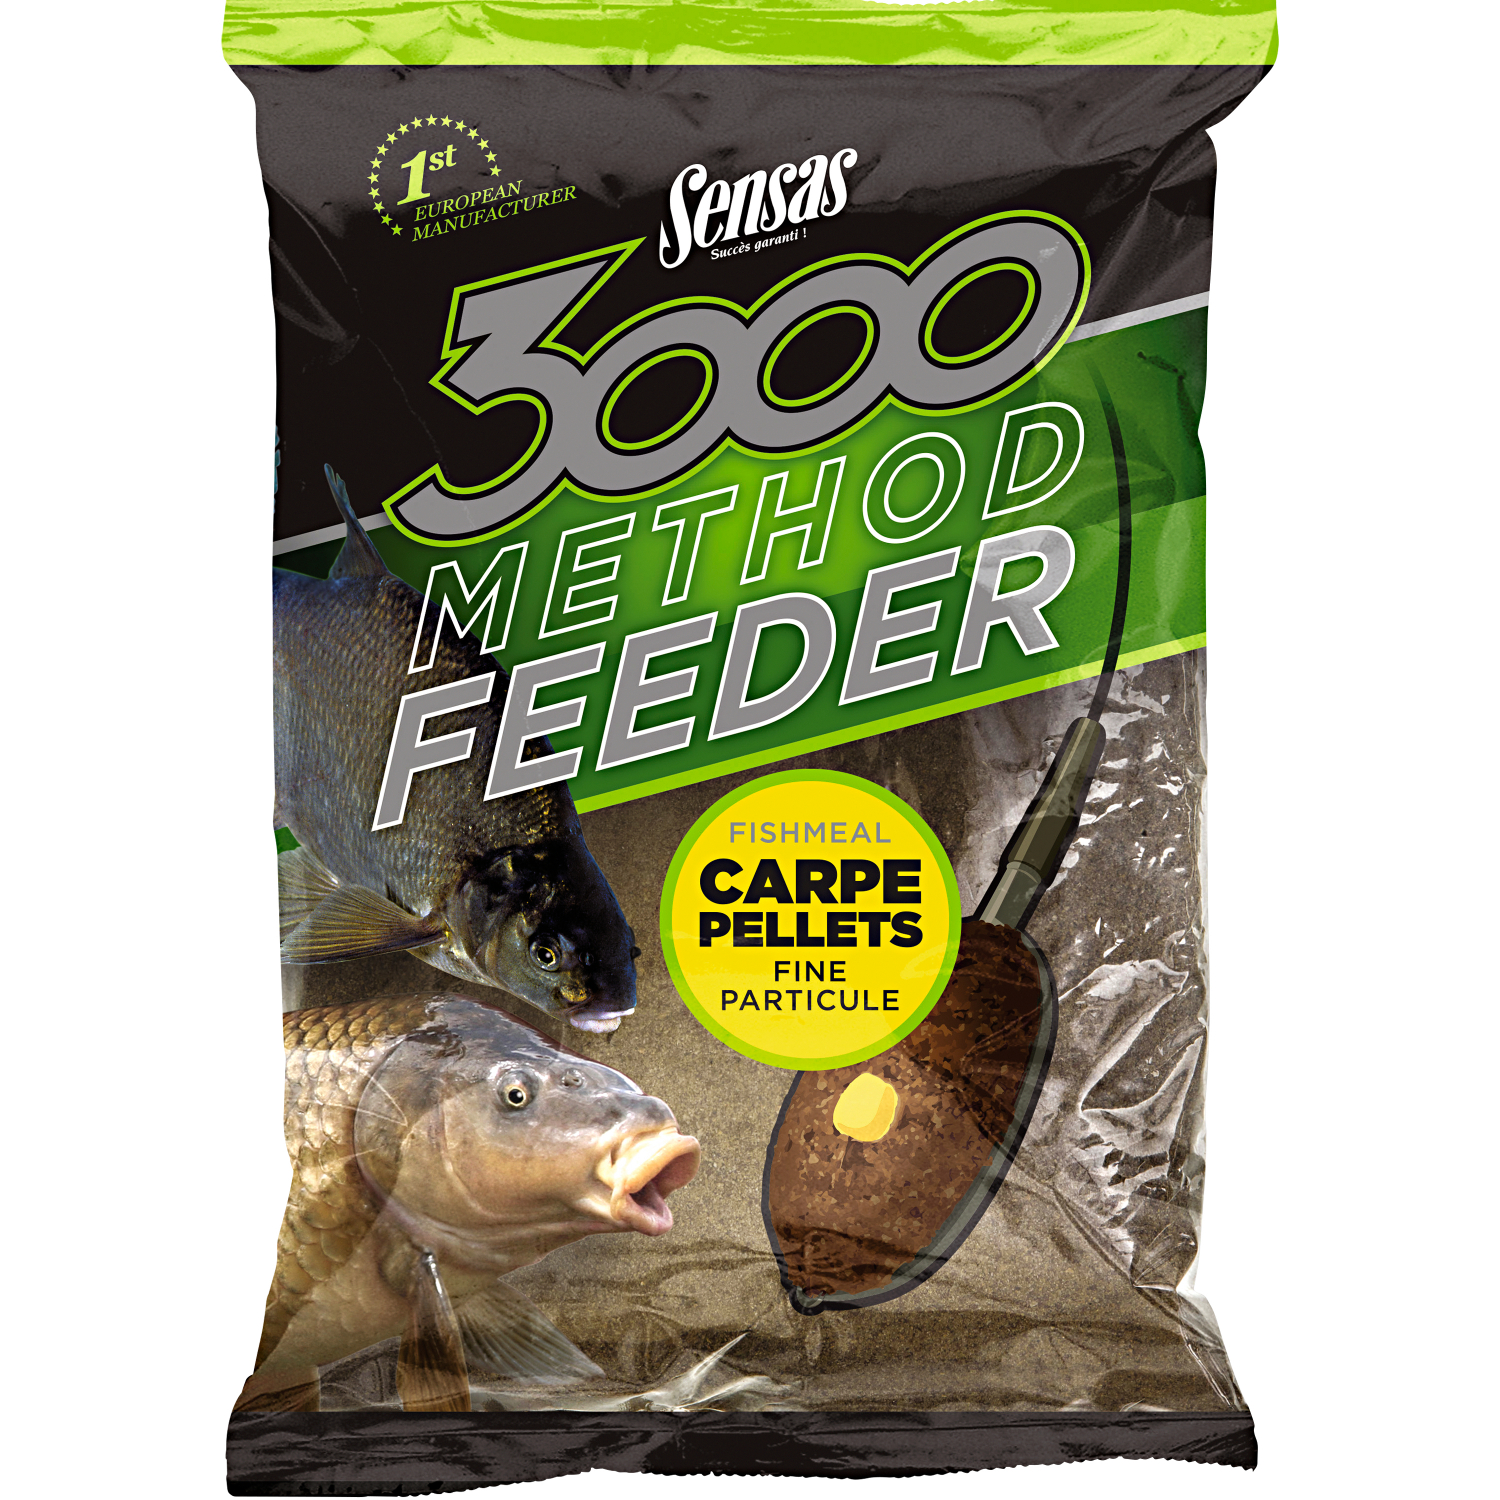 Sensas Coarse Fish Feed 3000 Method (Carp Pellets) 